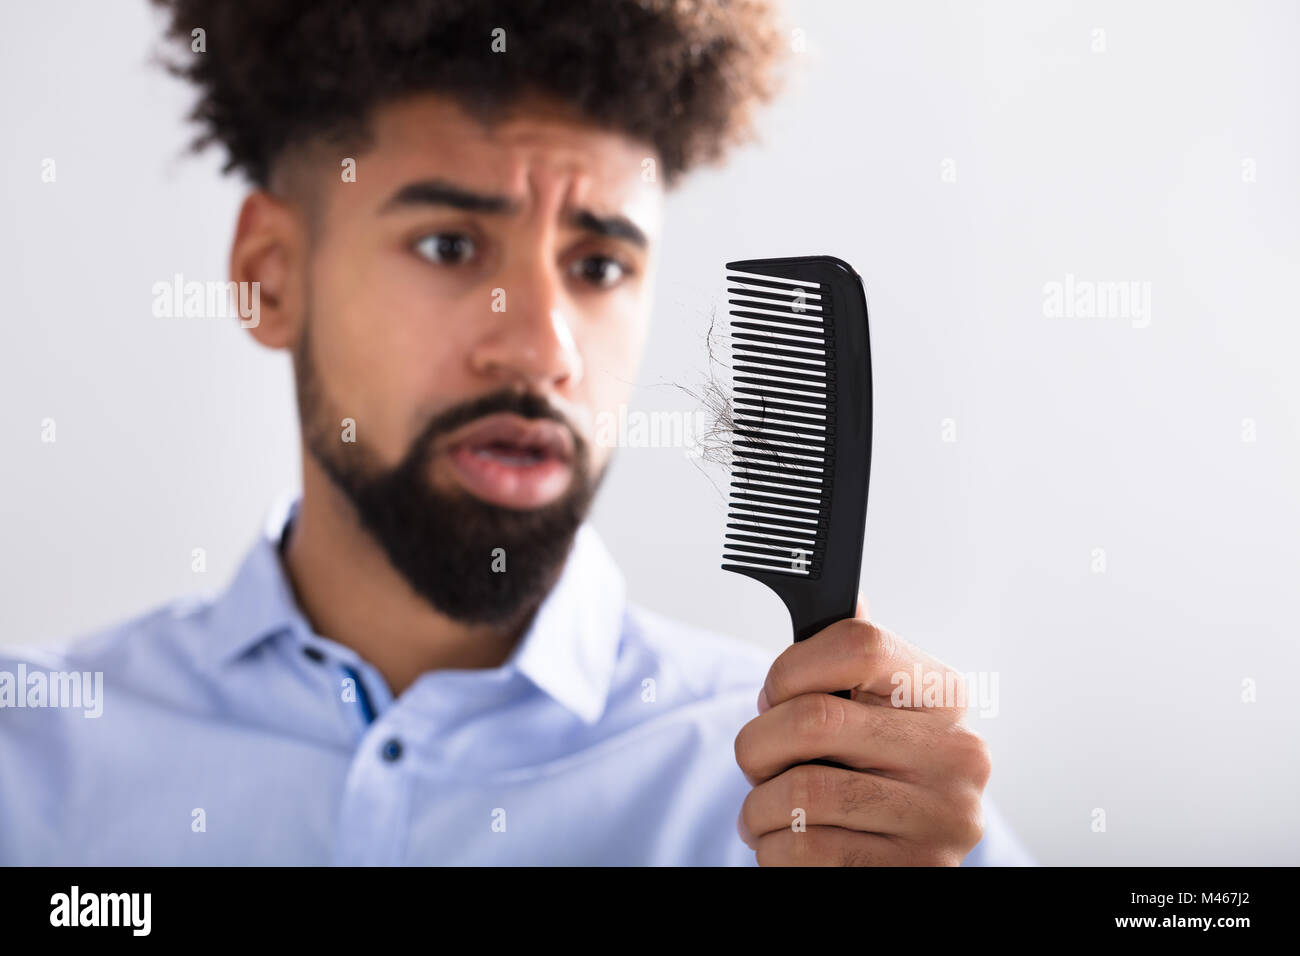 Young Man Holding Comb Looking At Hair Loss Stock Photo